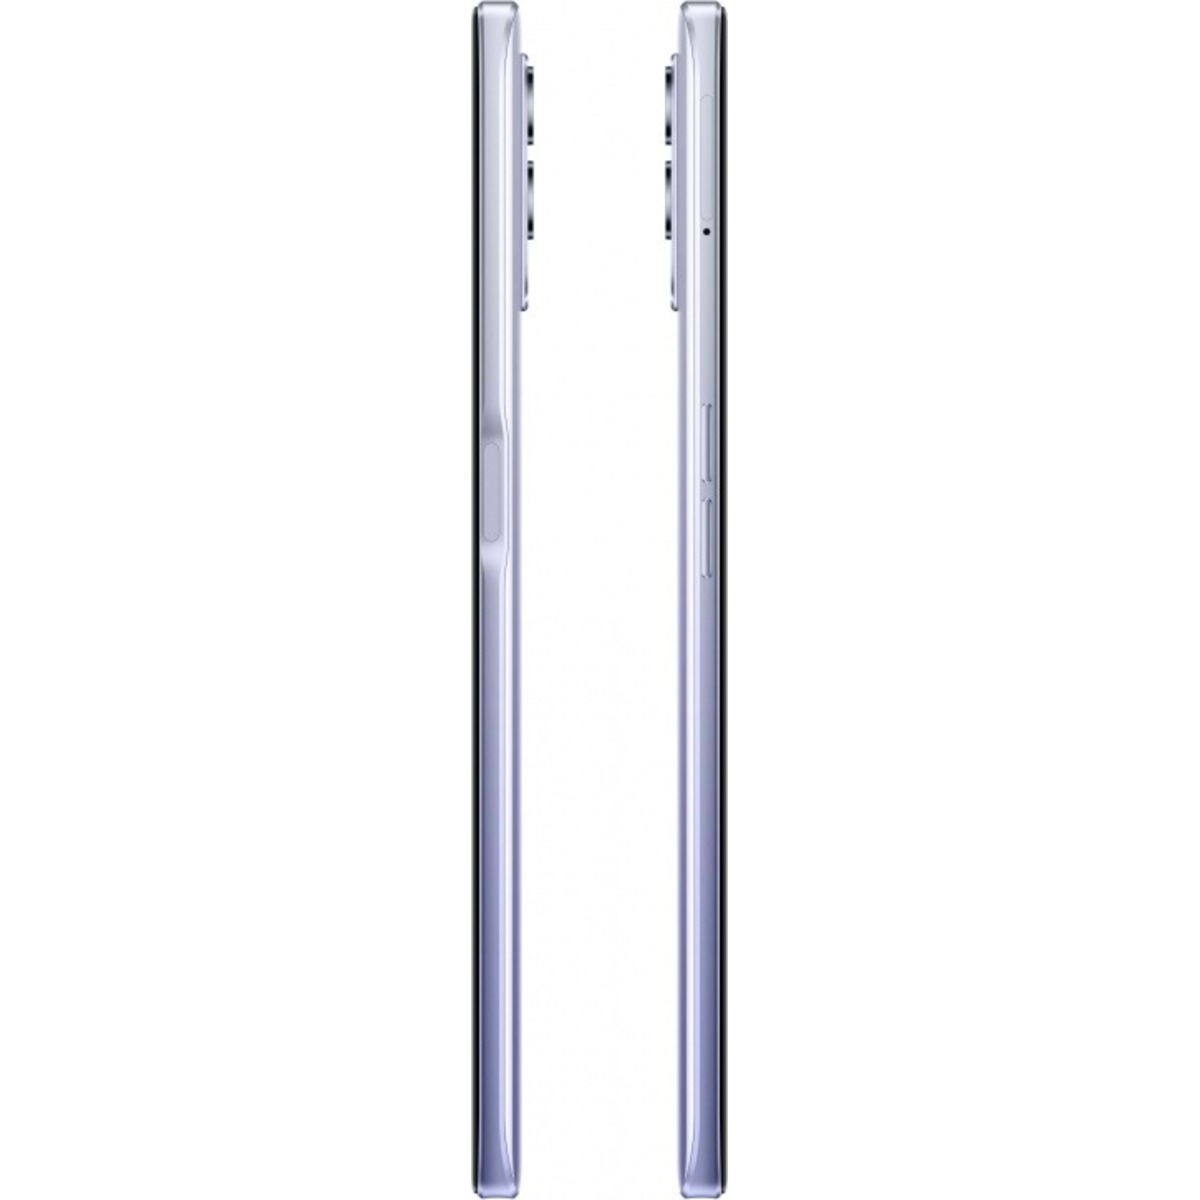 Смартфон realme 8i 4/128Gb (NFC) (Цвет: Space Purple)